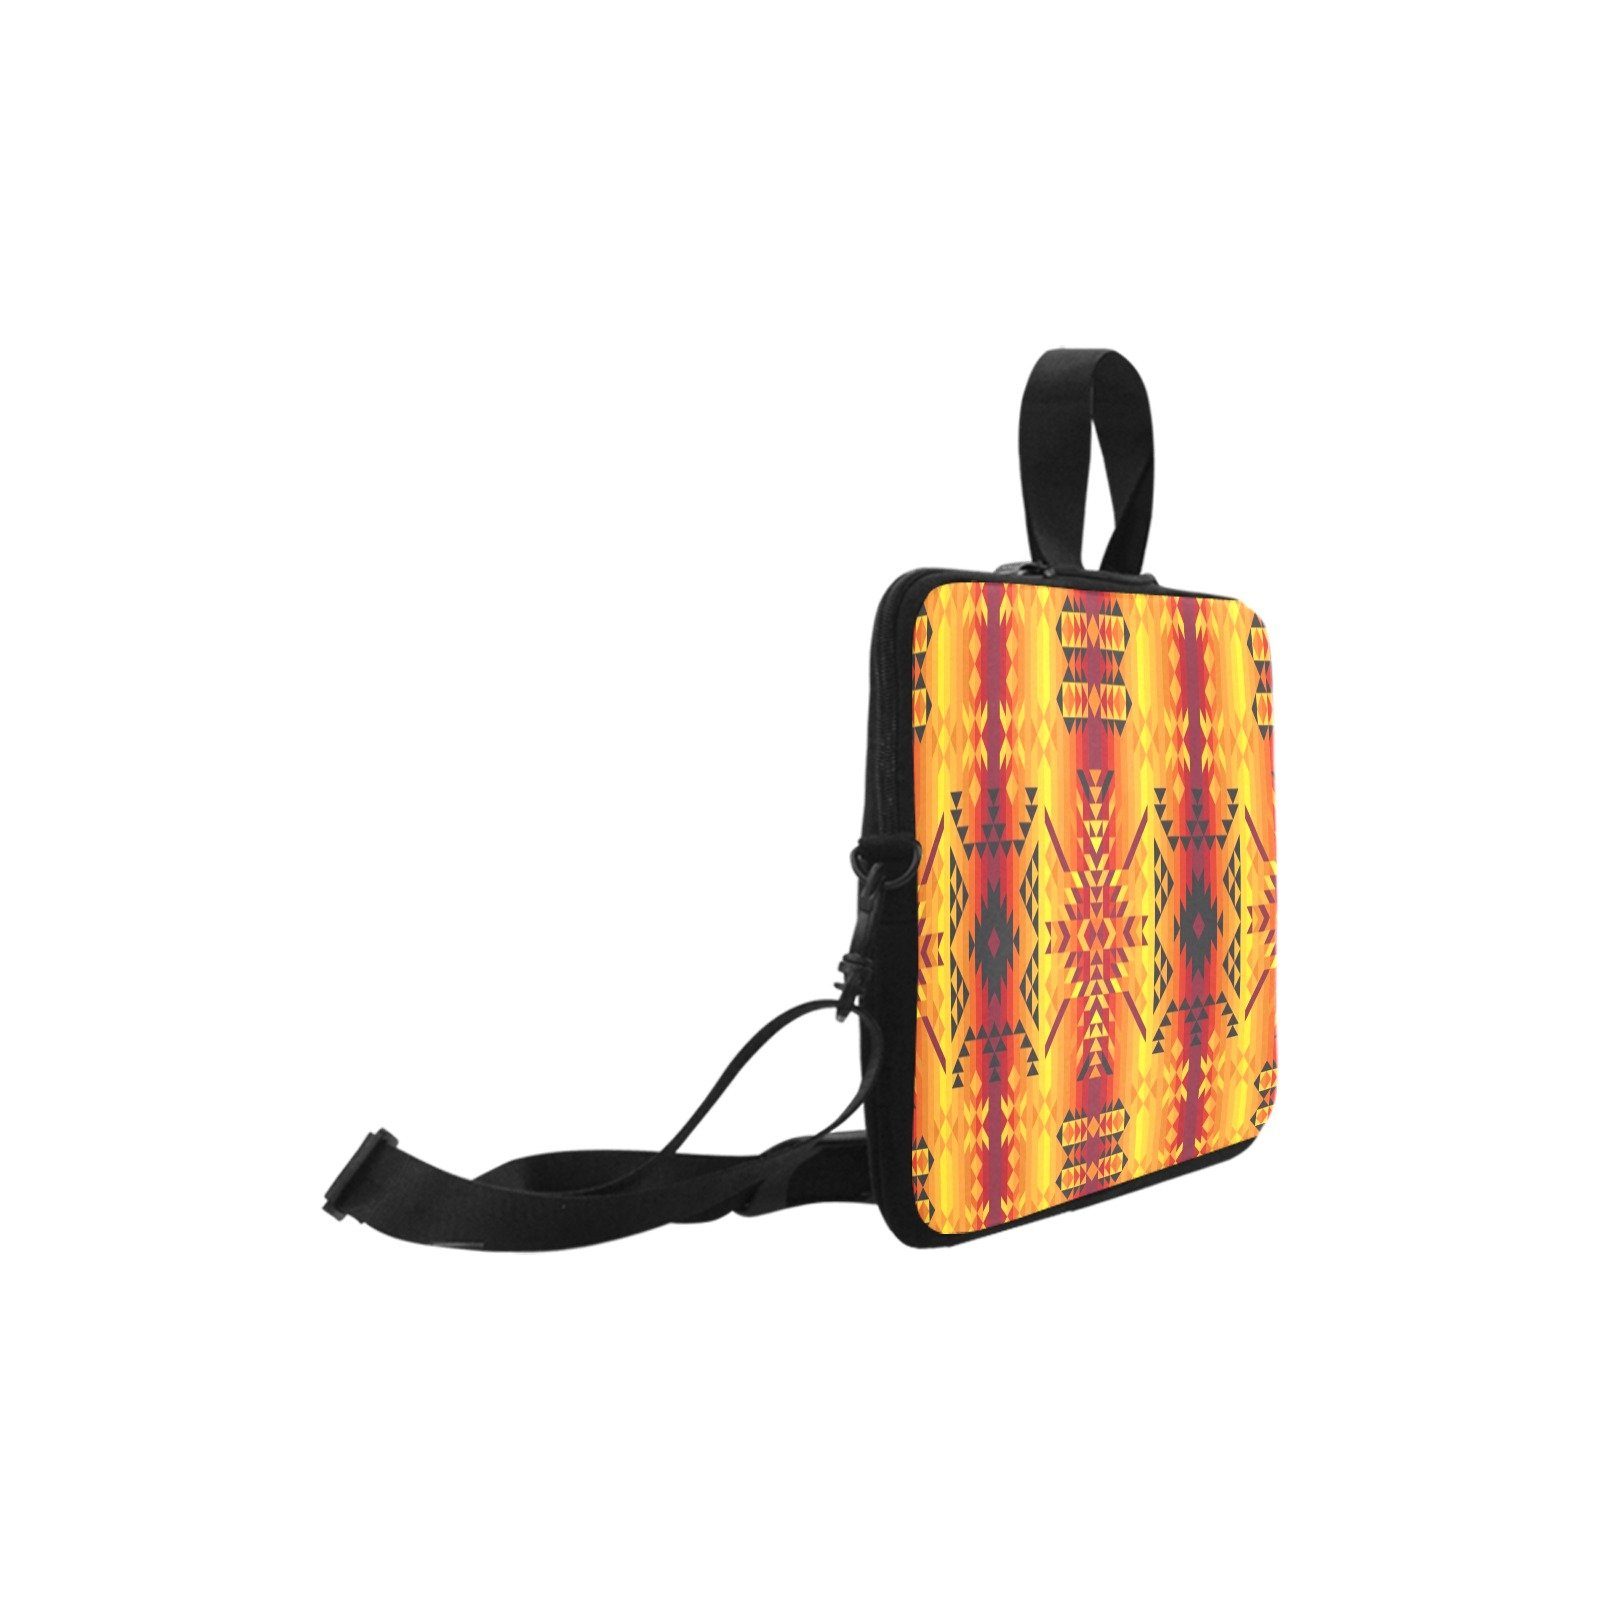 Desert Geo Yellow Red Laptop Handbags 15" Laptop Handbags 15" e-joyer 